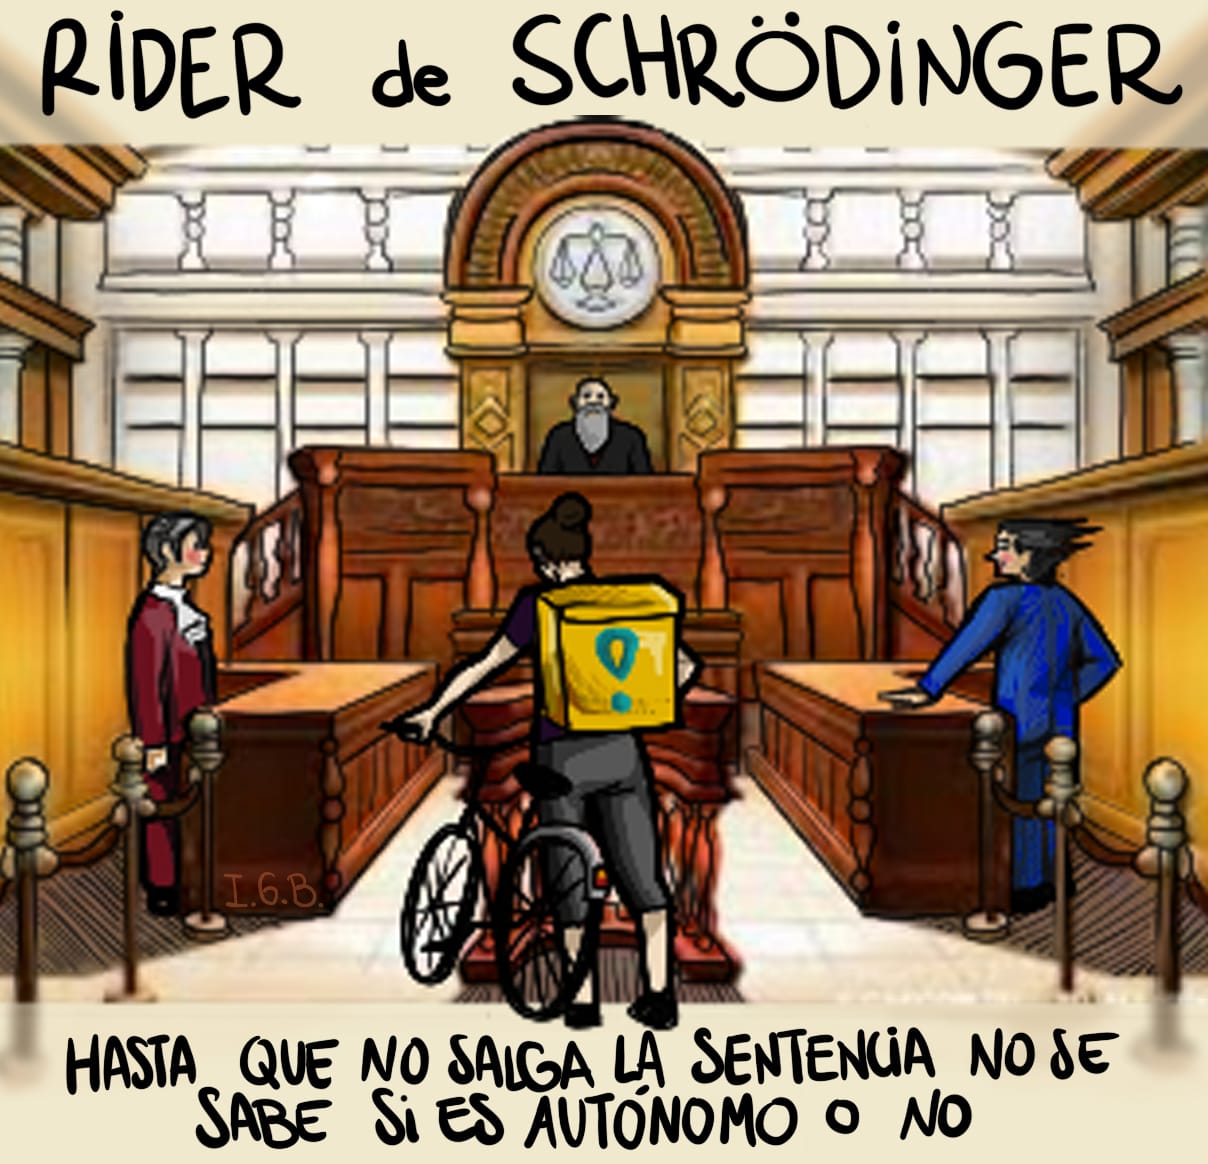 El rider de Schrödinger